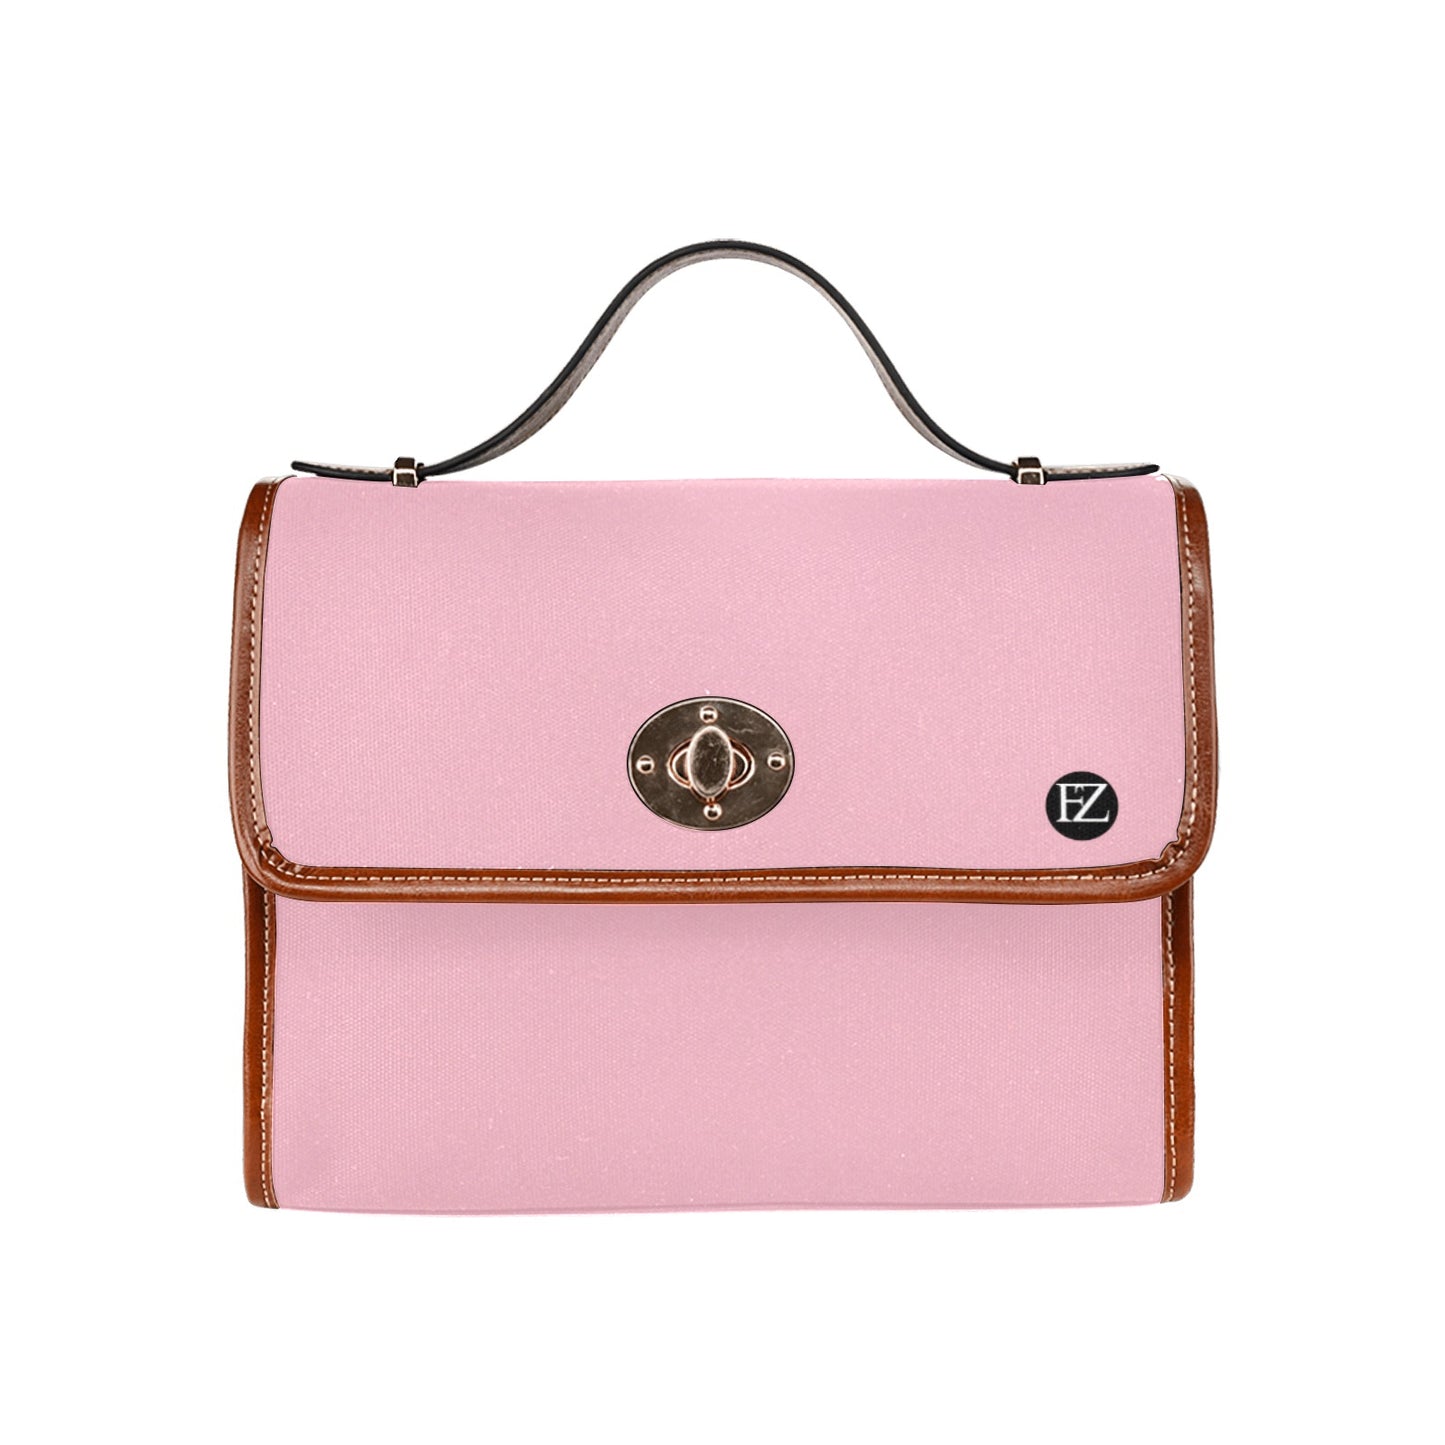 fz original handbag one size / fz 0riginal handbag - pink all over print waterproof canvas bag(model1641)(brown strap)